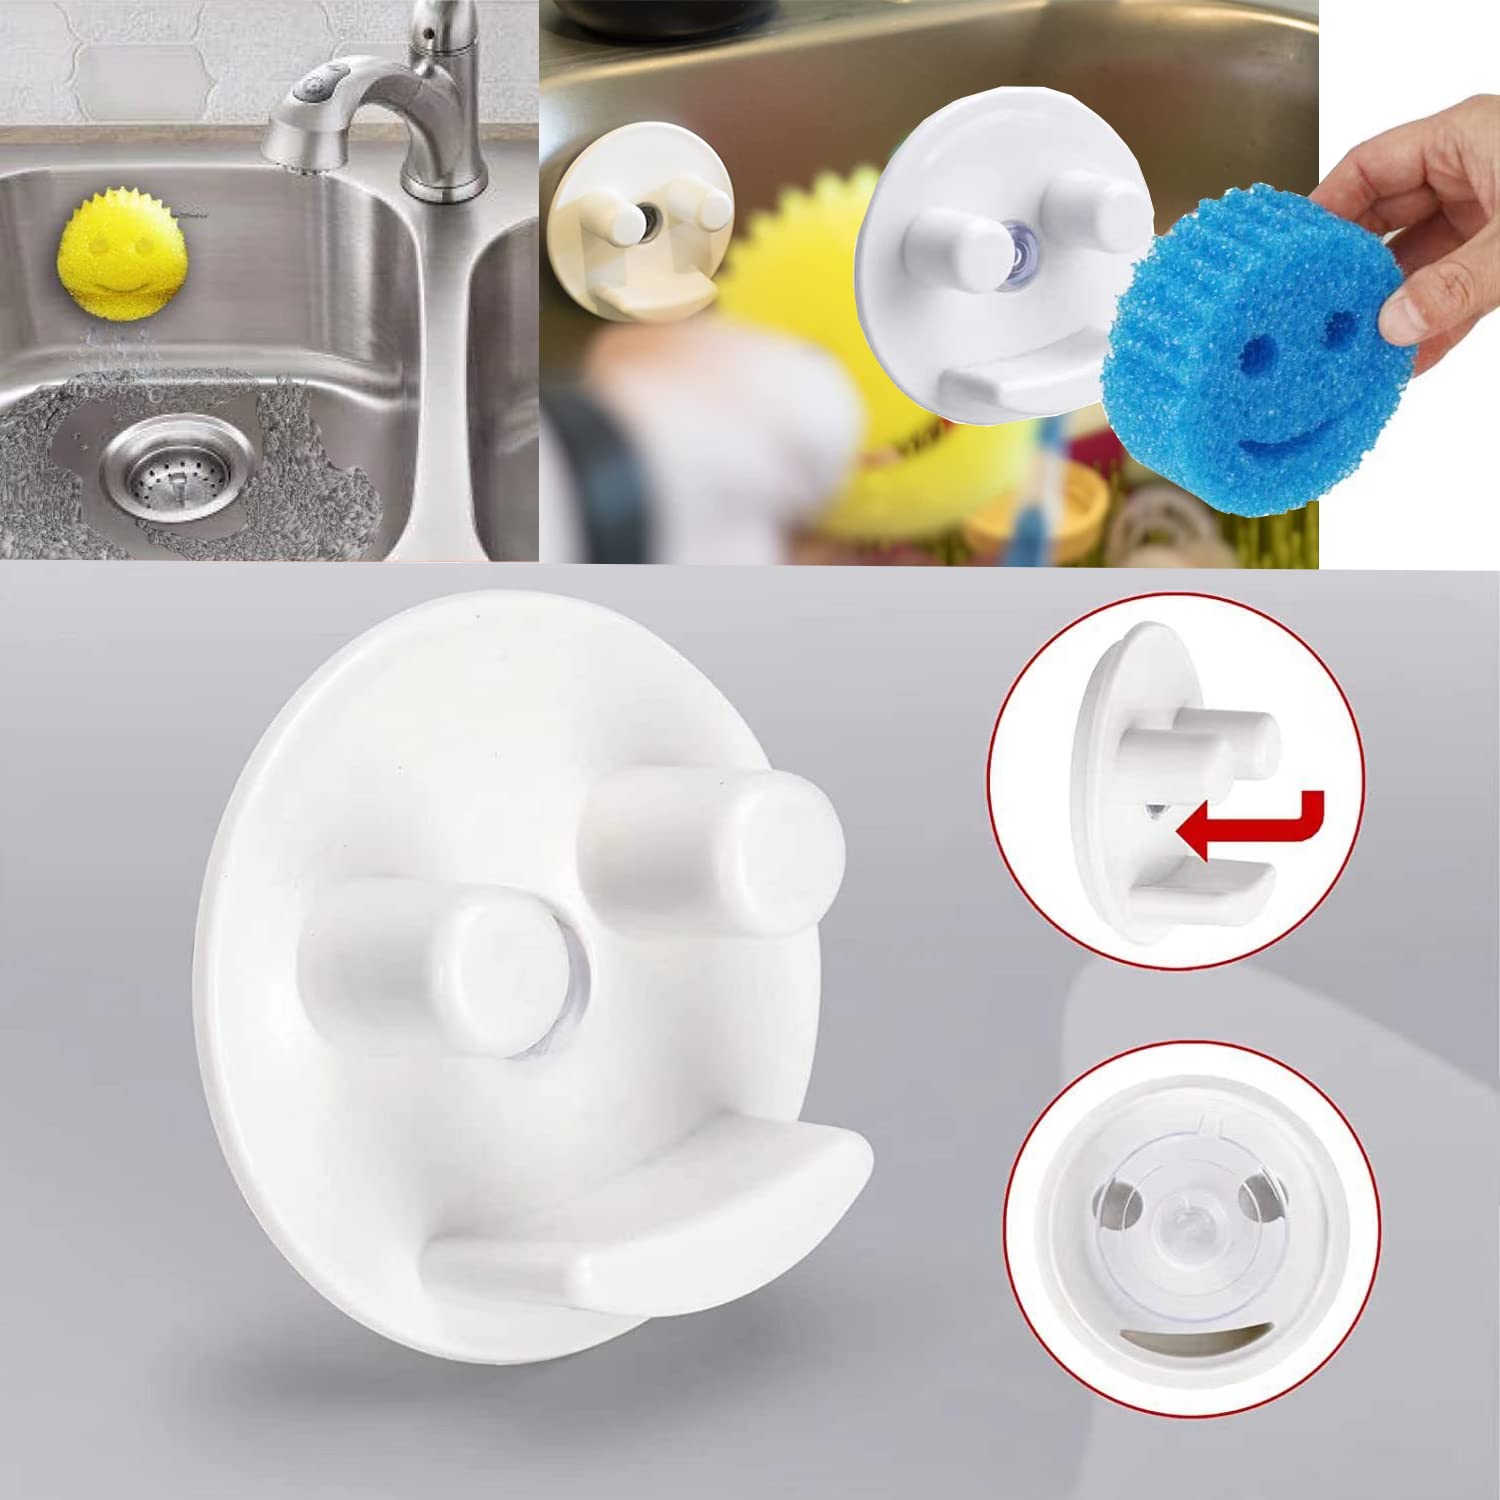 FUNOWN Sponge Holder,2 pack Sponge Holder for Kitchen Bathroom Sink Suction Cup Installation Sponge Organizer for Kitchen/Bathroom Sink (Sponges Not Included)